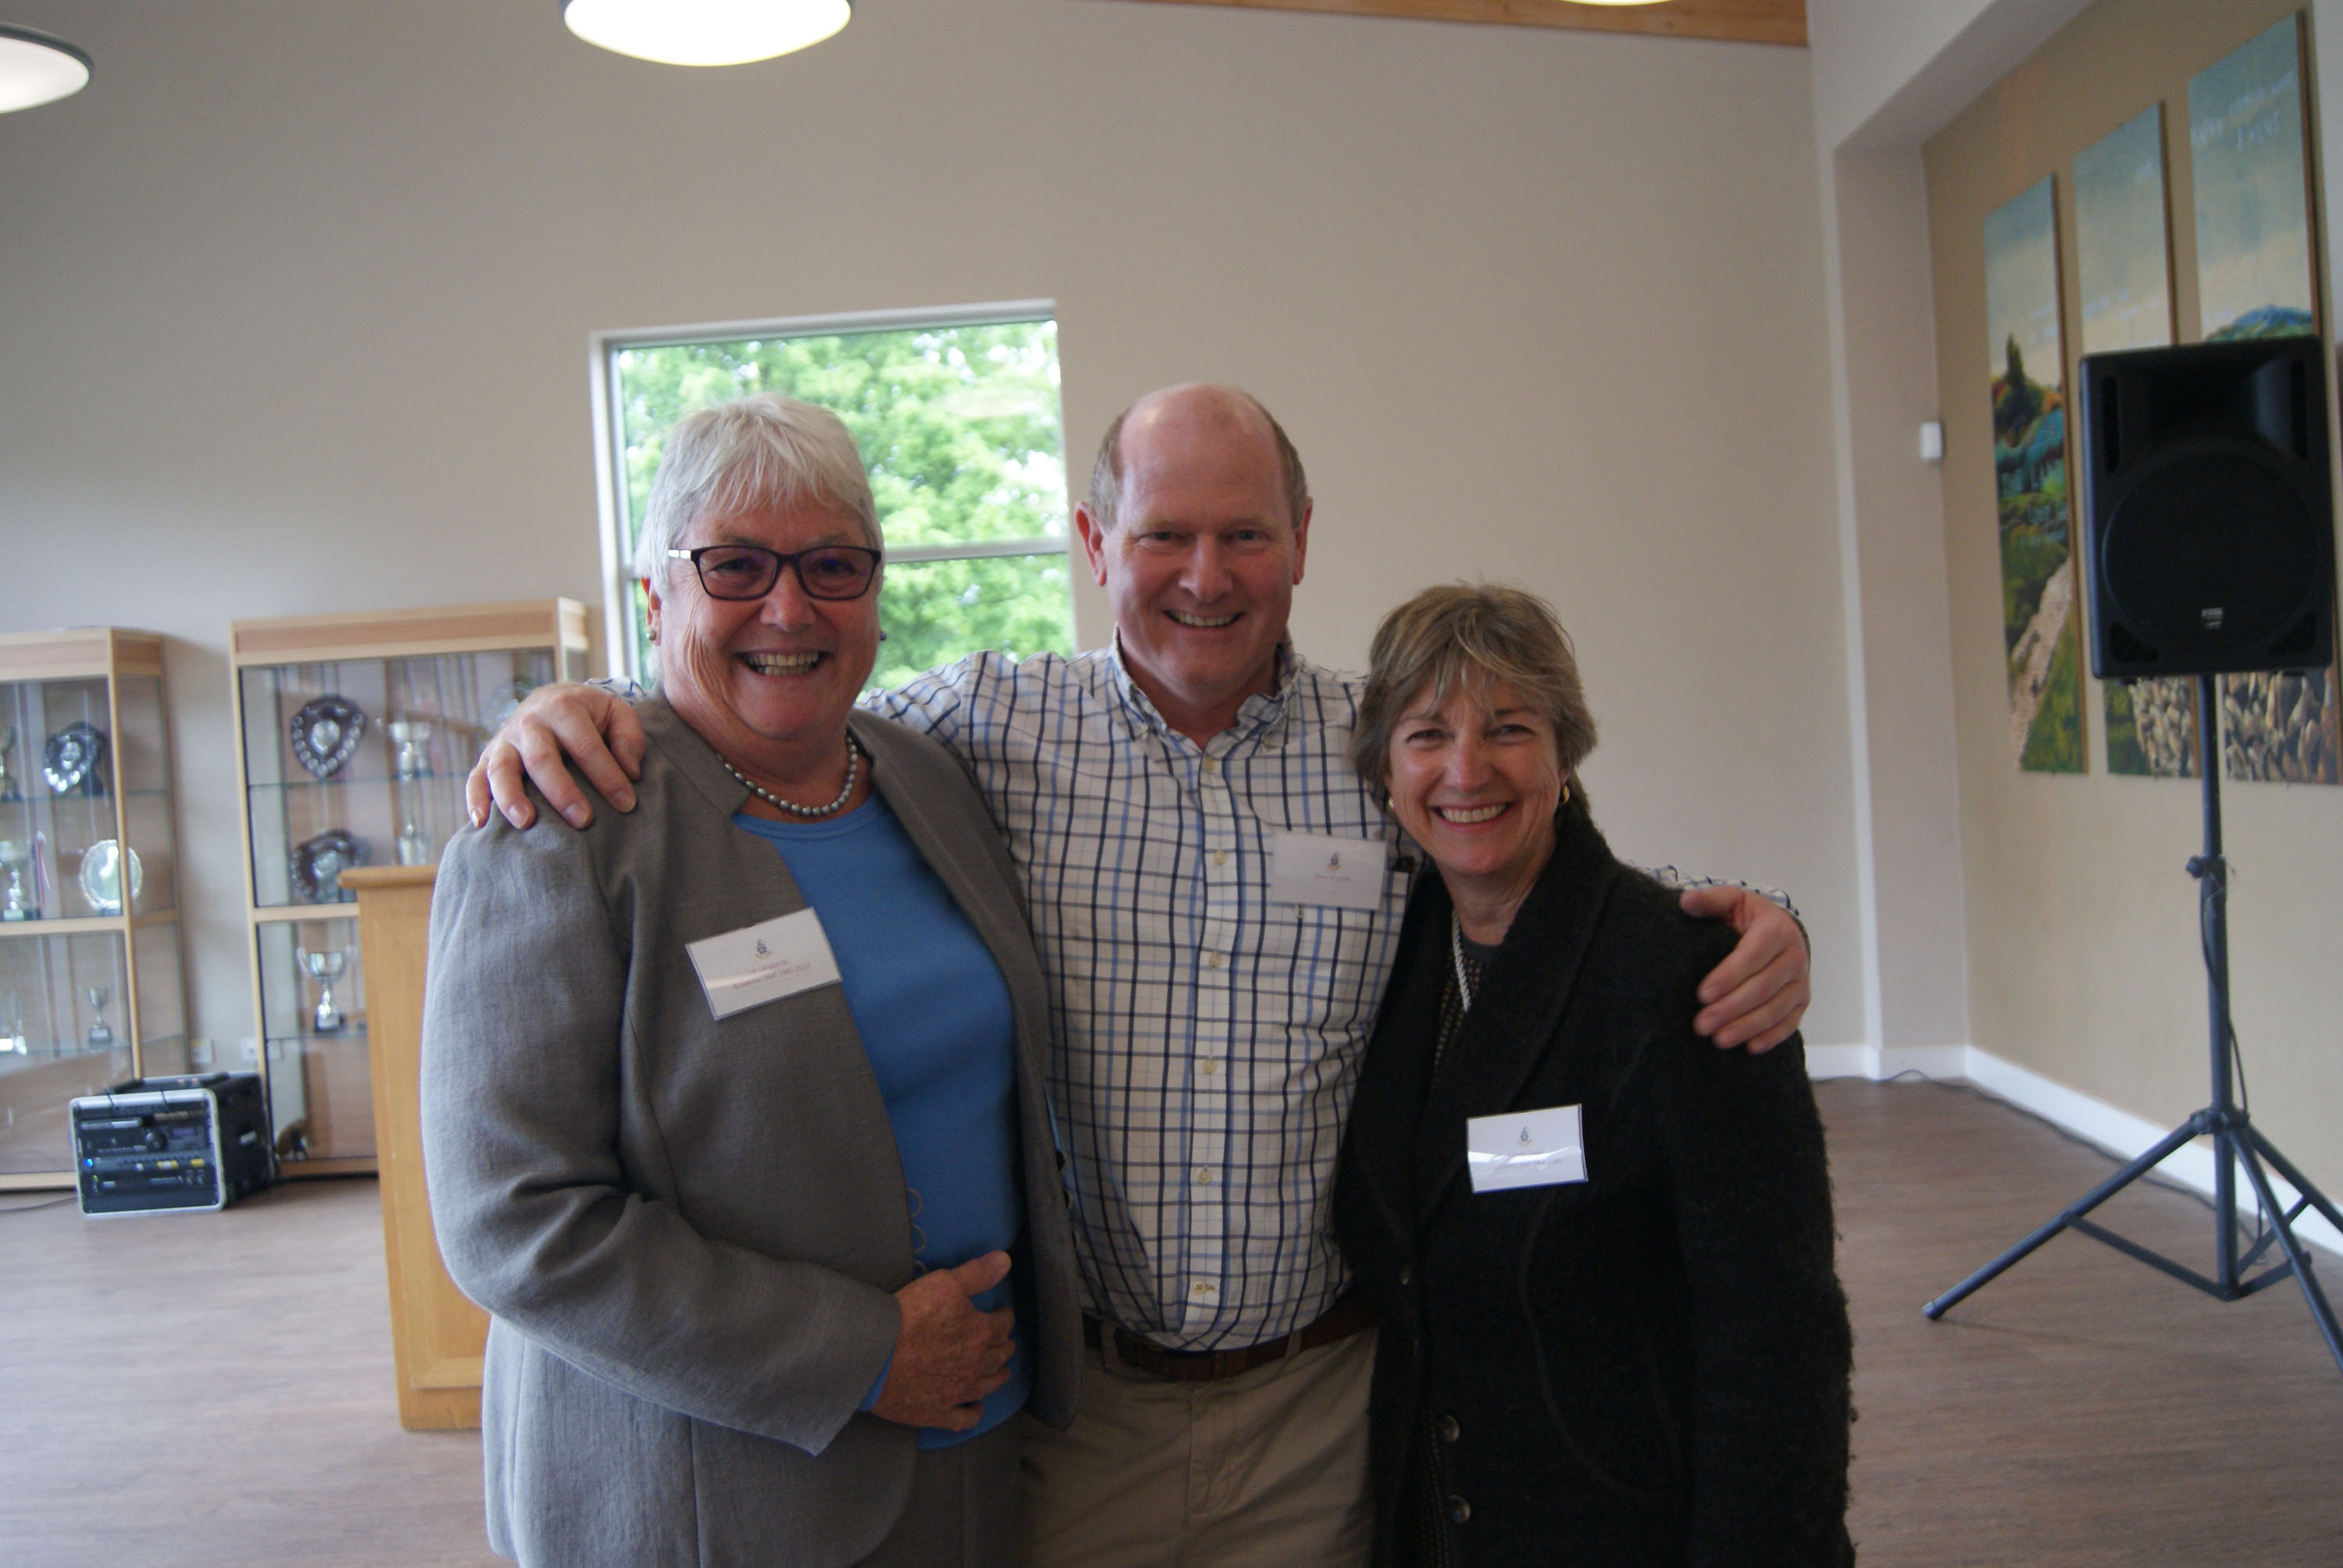 Liz Langlands, Steve Kingston and Venetia Cosier - Former Teaching Staff (Pre-2000s) Reunion, 20th May 2017